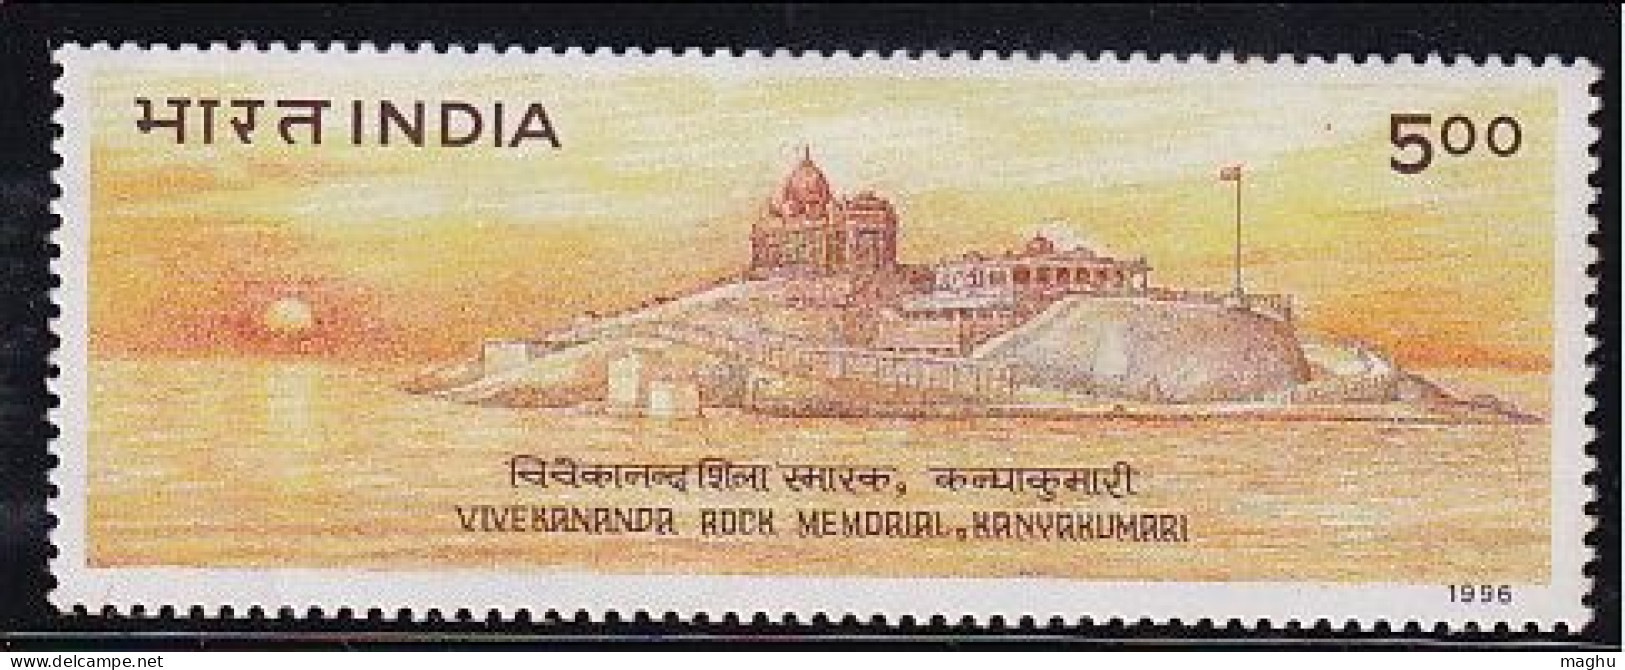 India MNH 1996, Vivekananda Rock Memorial, Kanyakumari, Flag, Sun, Astronomy, Cond.,stains - Nuovi